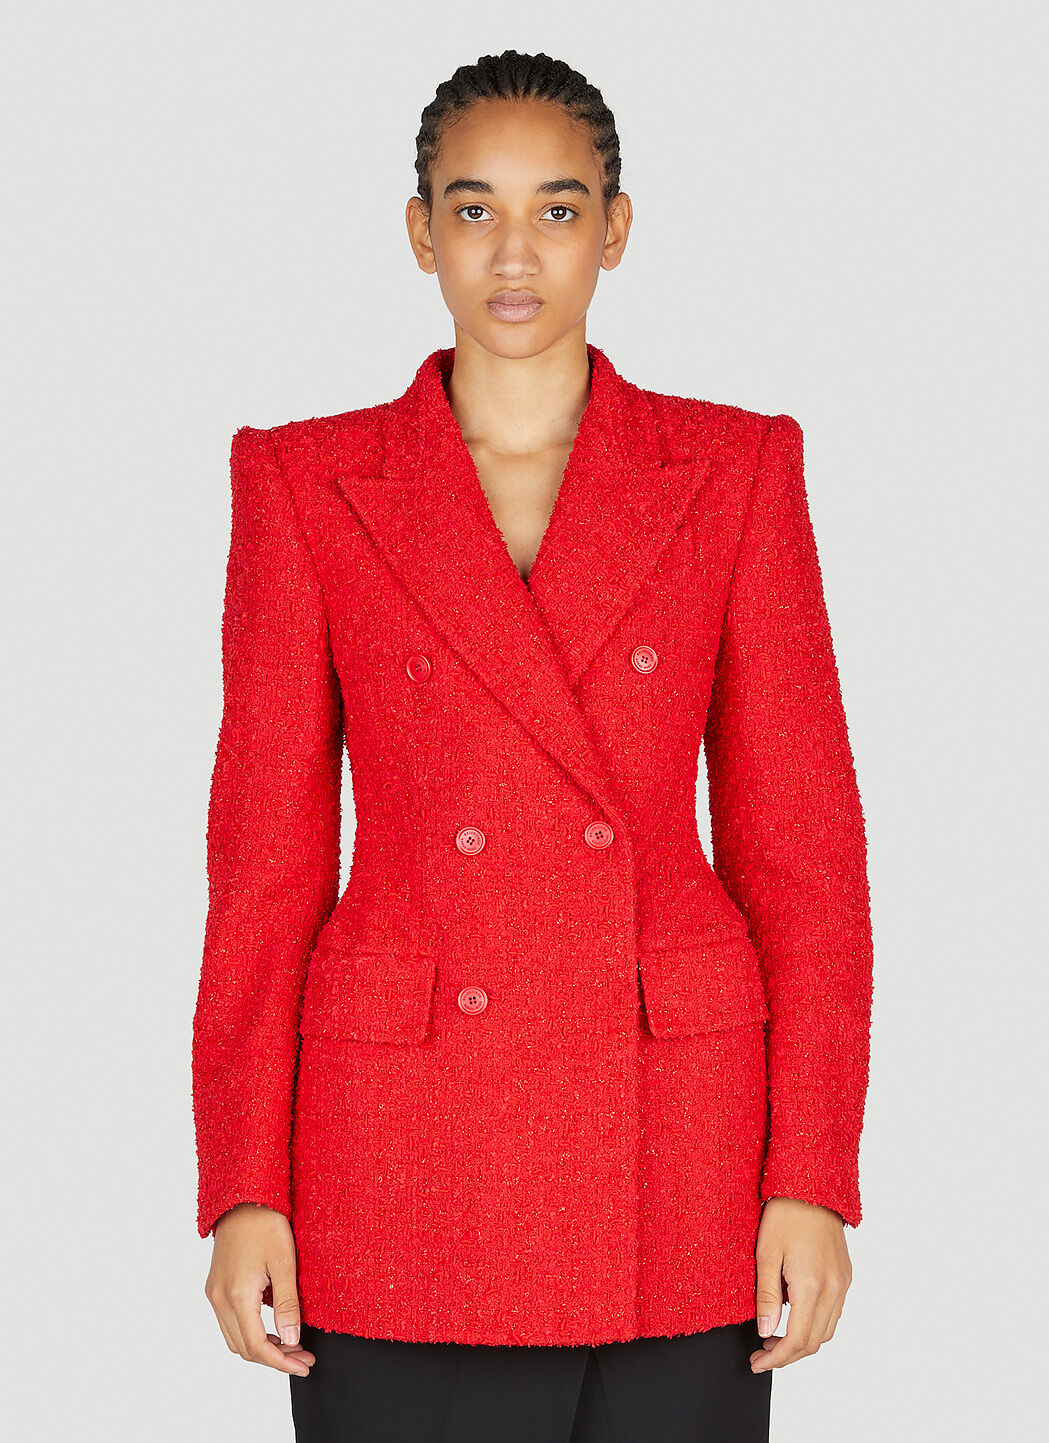 EISA c1950s CRISTOBAL BALENCIAGA Tweed Double Breasted Jacket Skirt Suit  Set  eBay